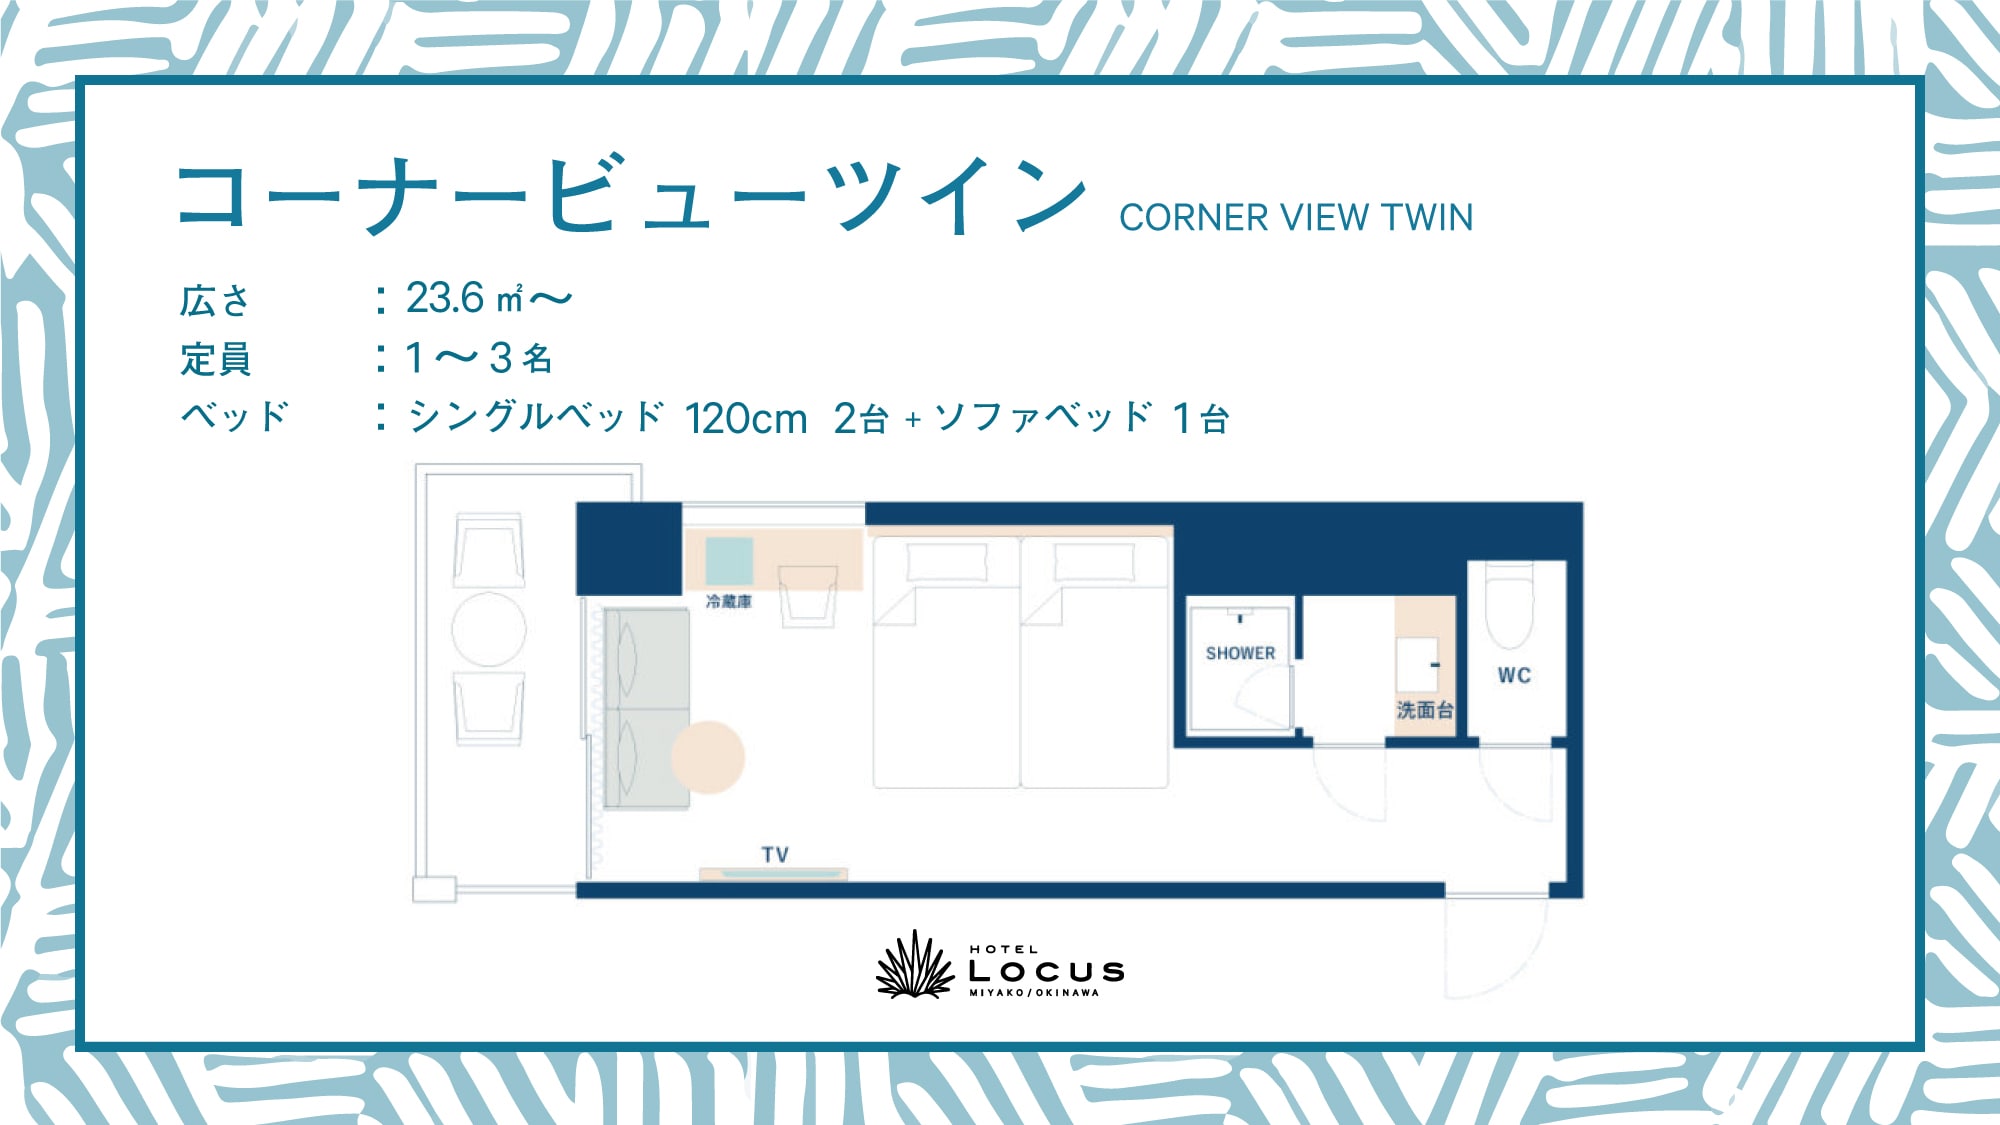 ◆ Corner view twin